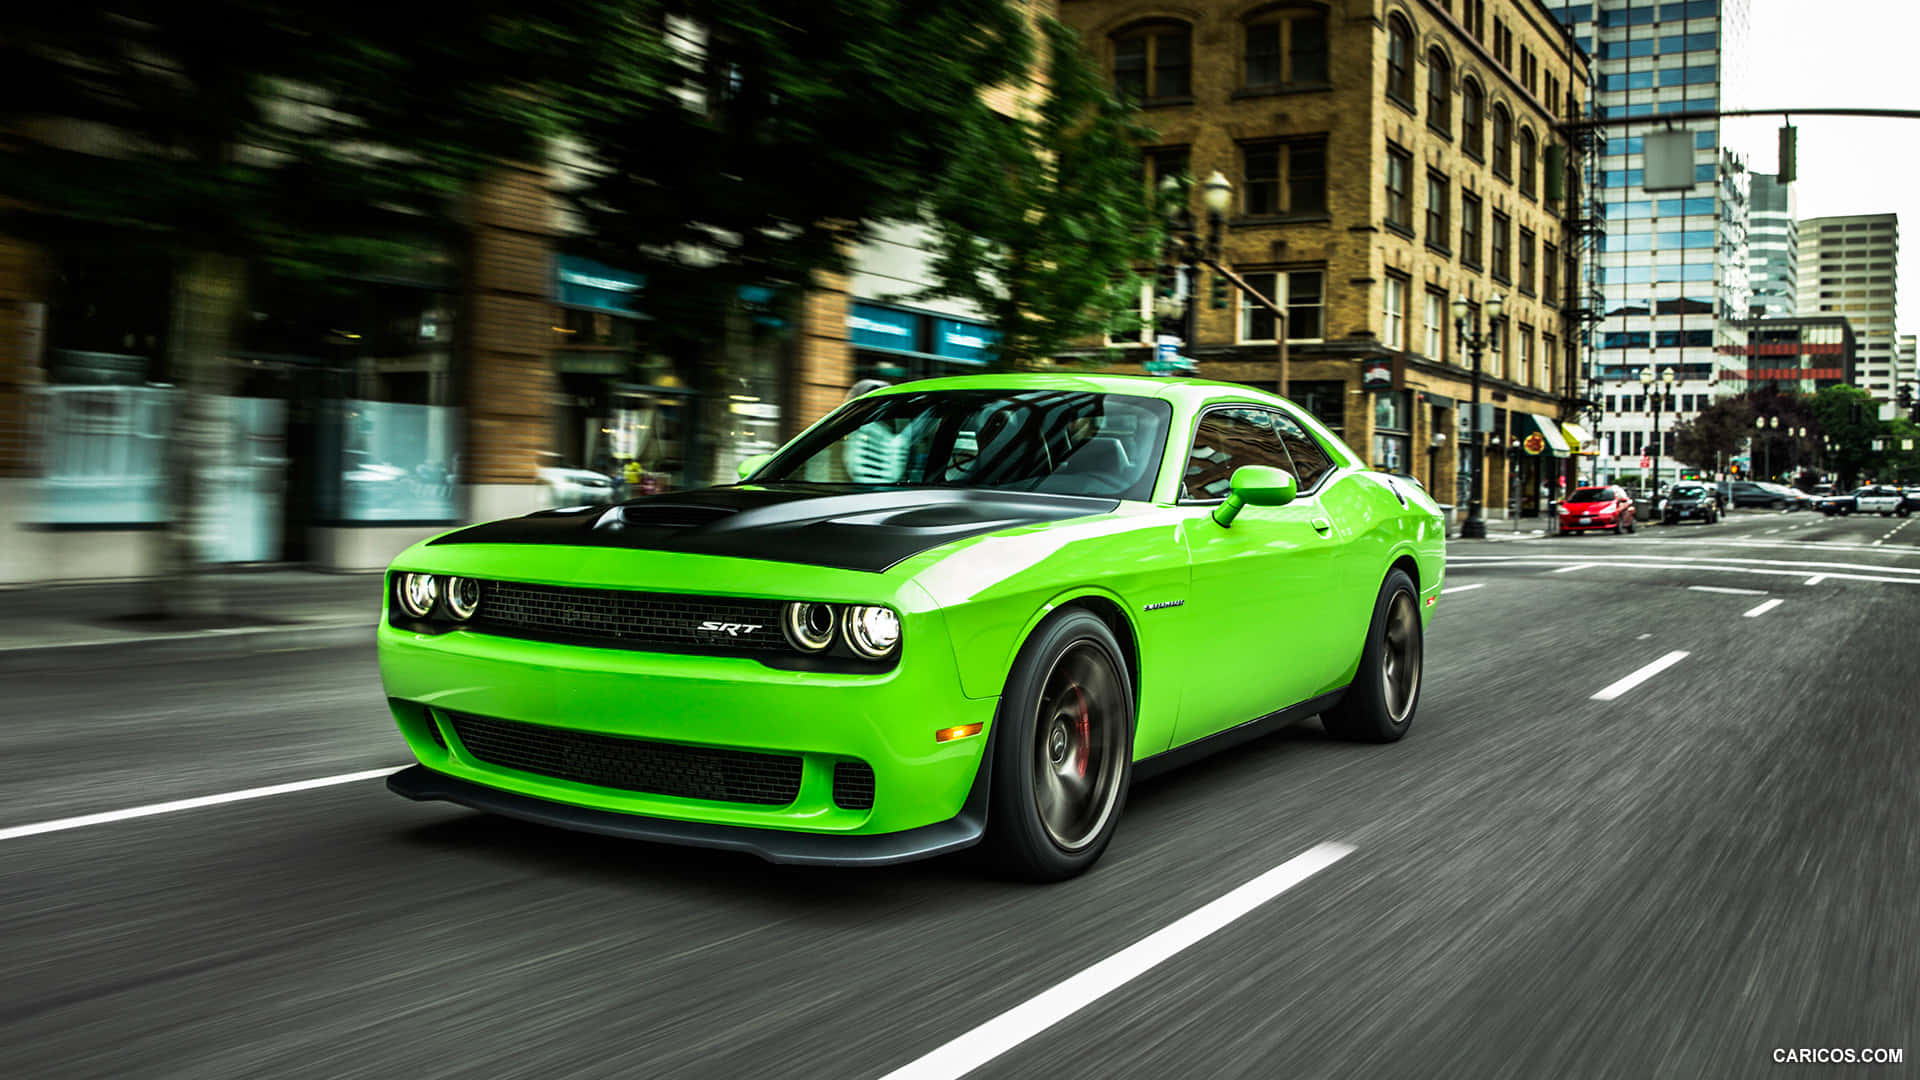 A Green Dodge Challenger Driving Down A City Street